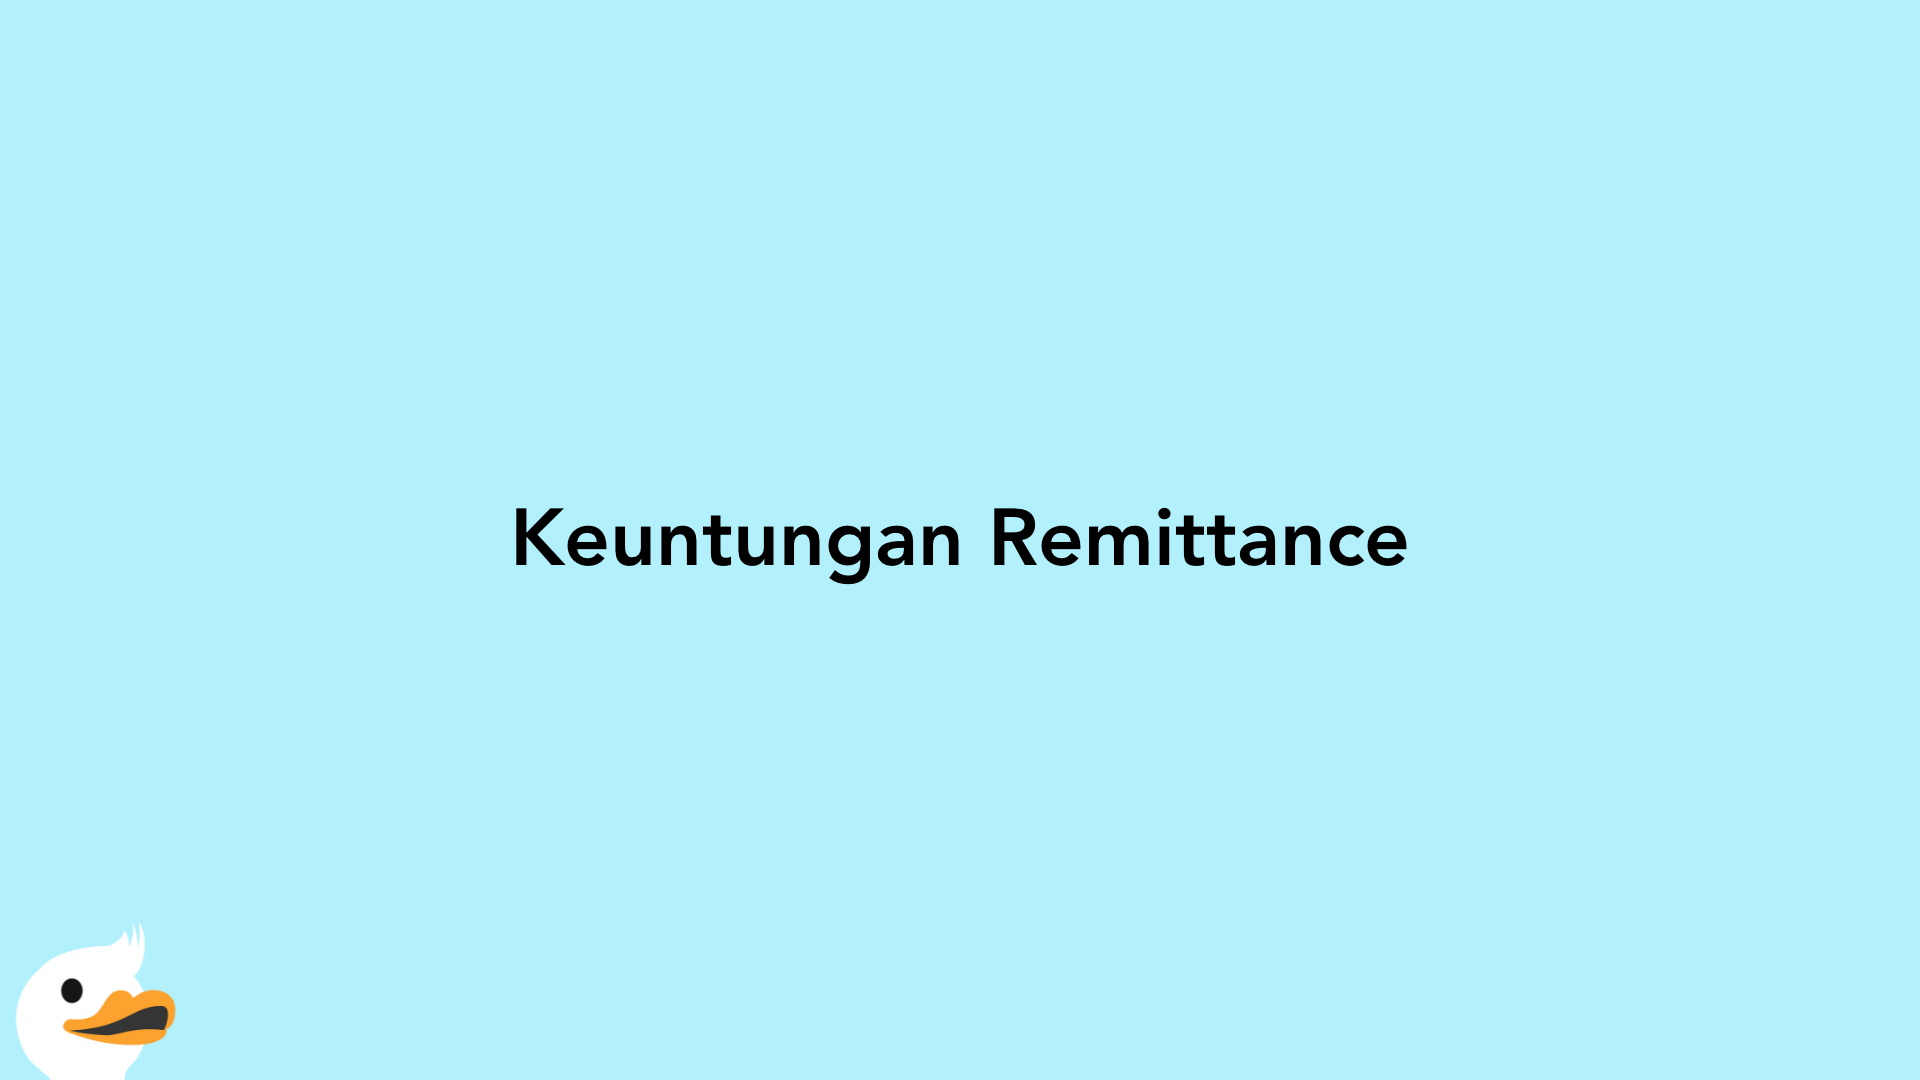 Keuntungan Remittance